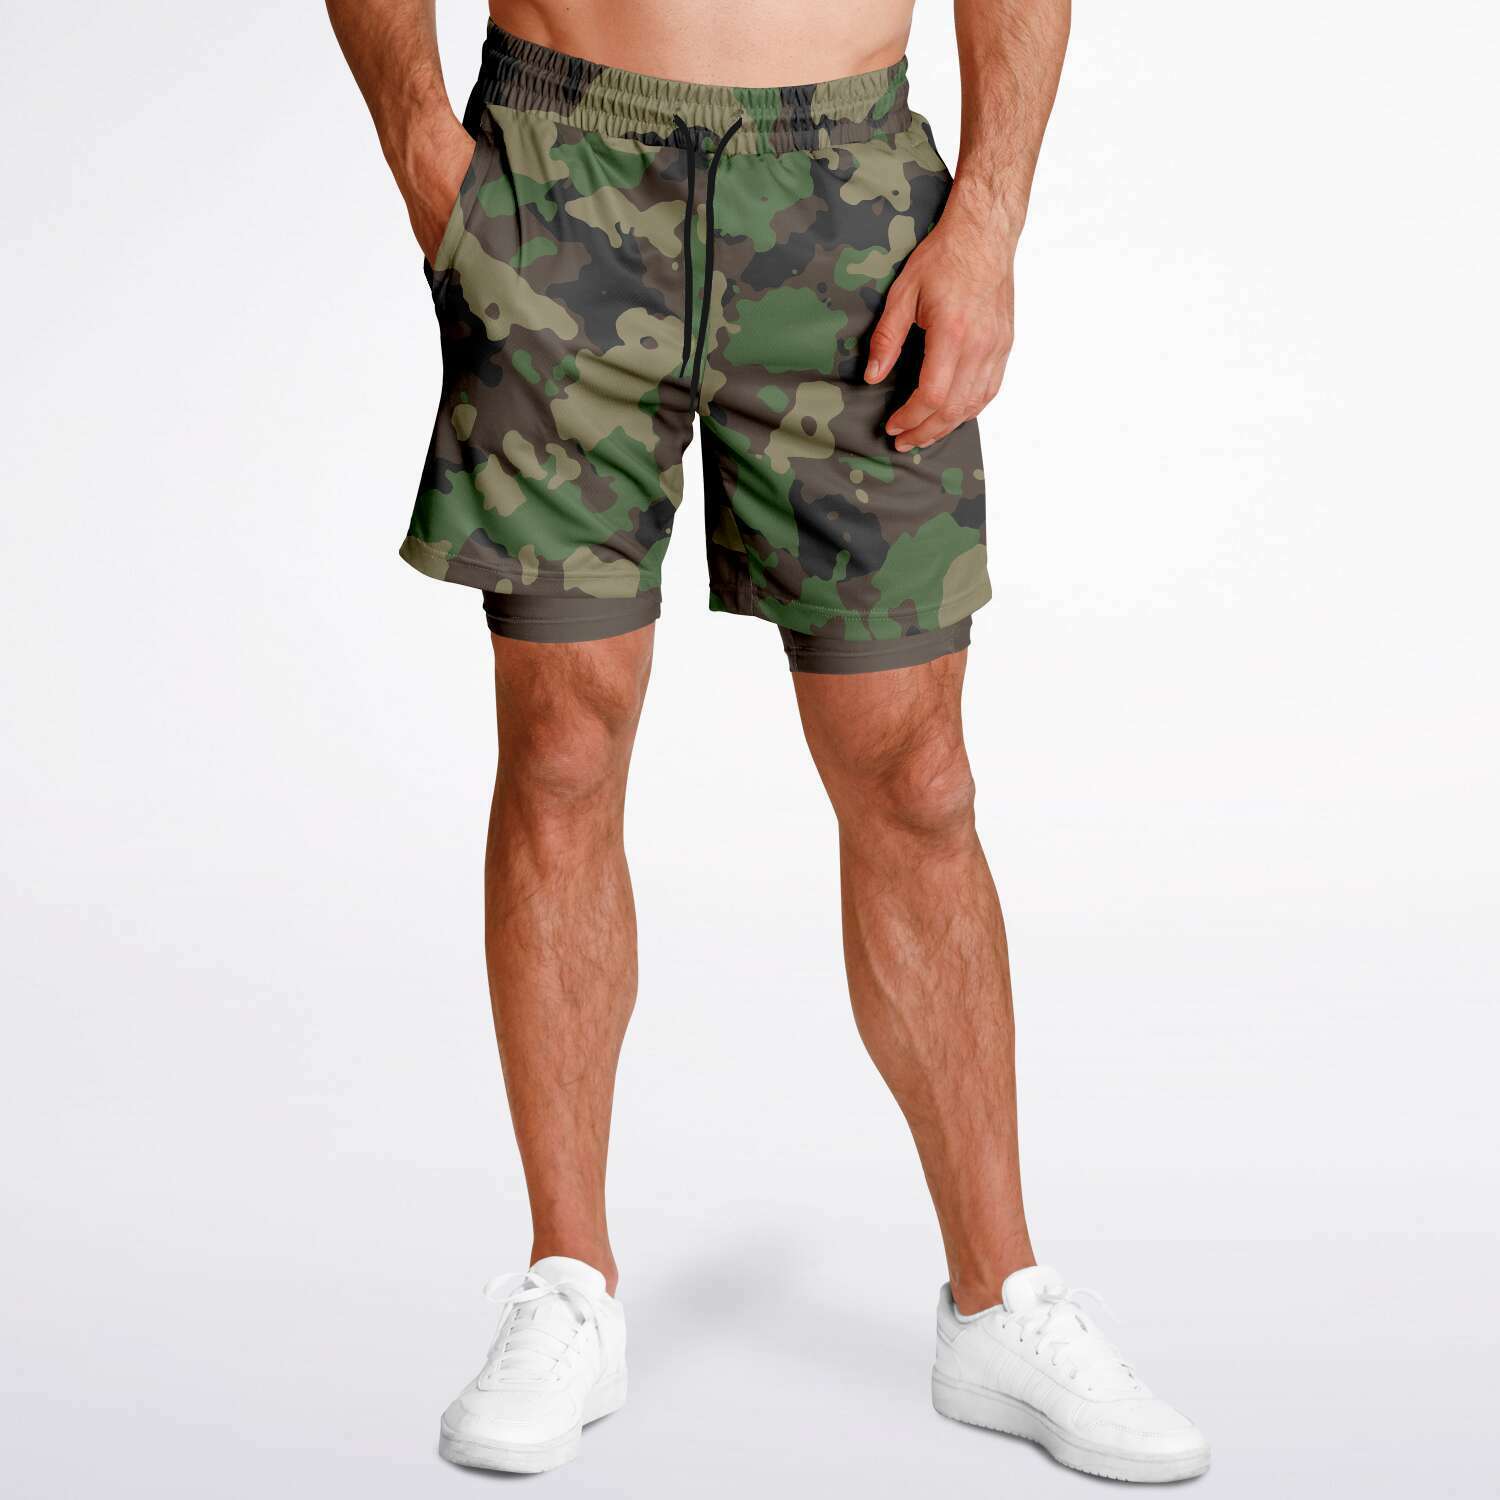 Woodland Multi-Cam Camo Shorts